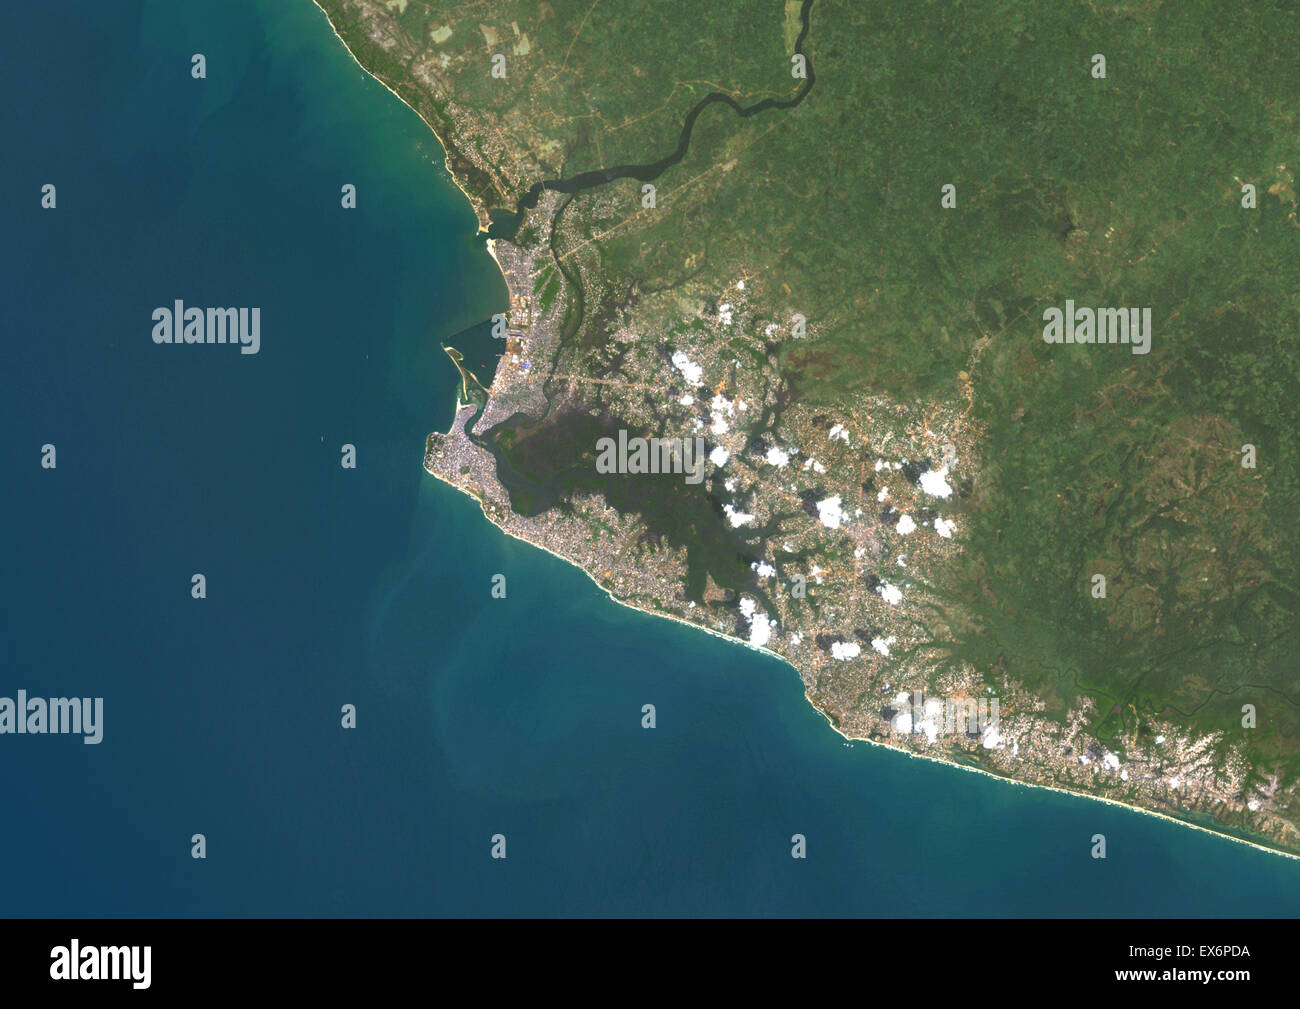 Colour satellite image of Monrovia, Liberia. Image taken on February 19, 2014 with Landsat 8 data. Stock Photo